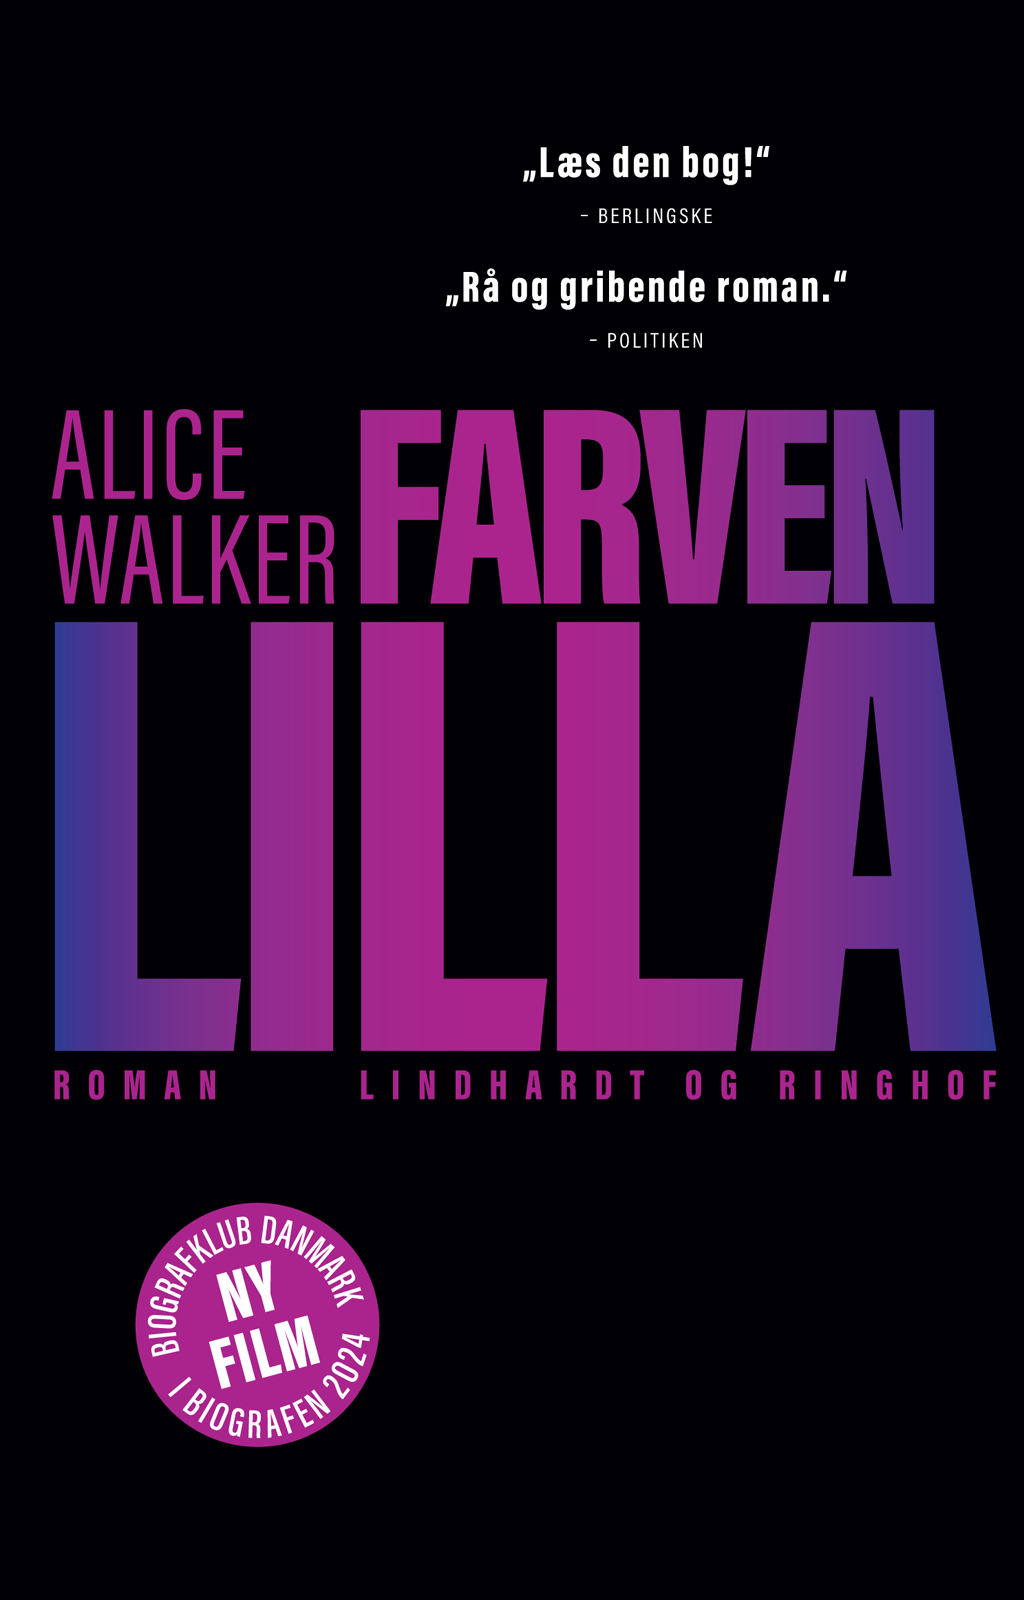 Alice Walker - Farven lilla